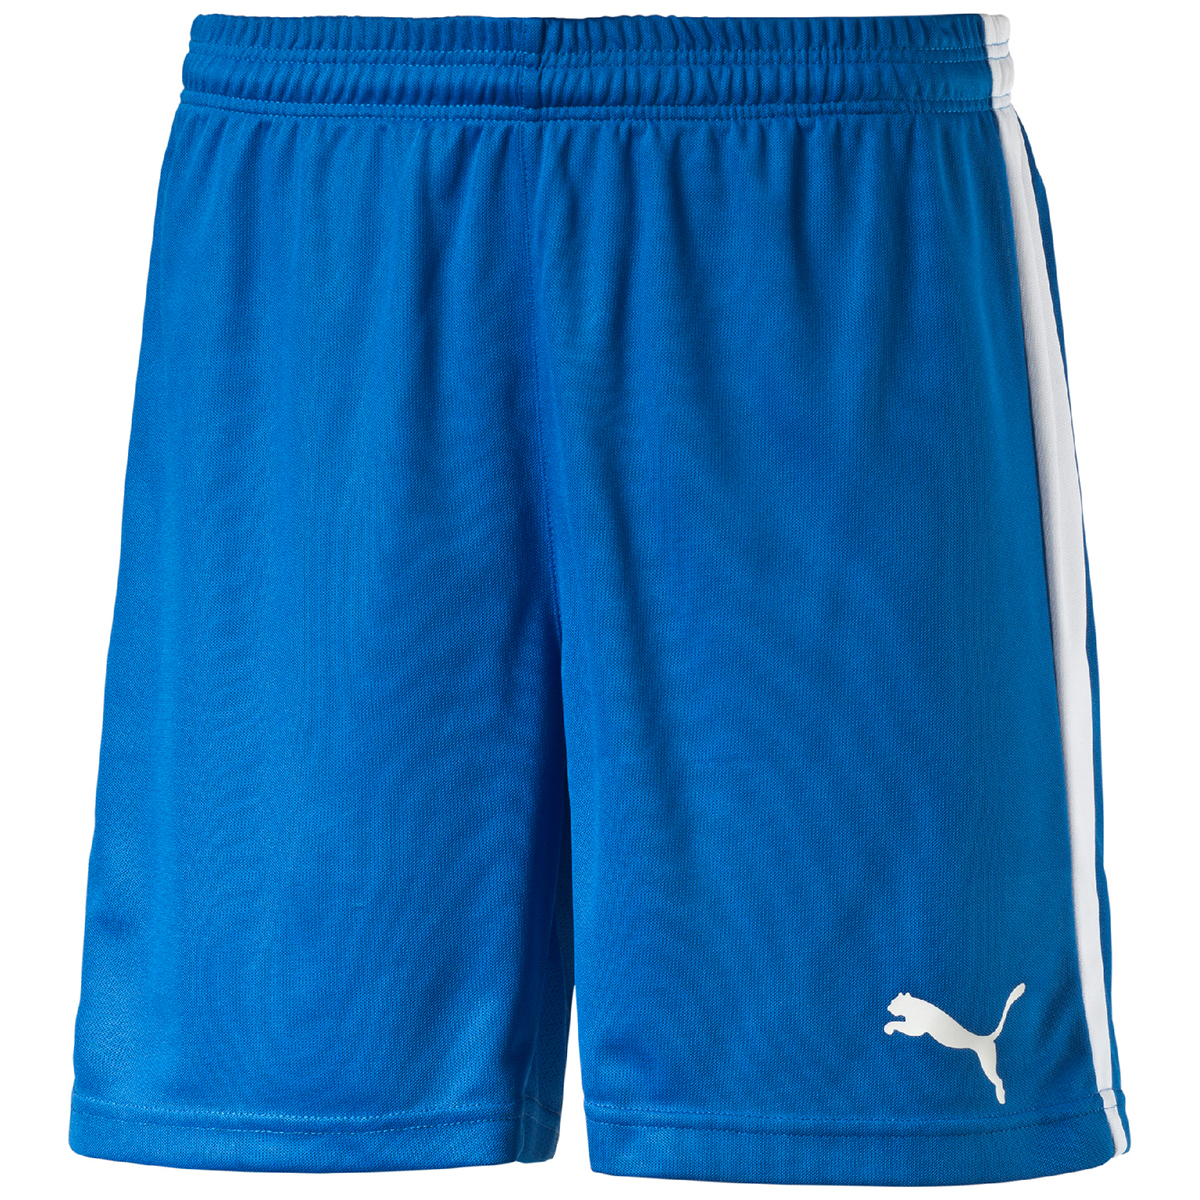 PUMA Herren Pitch Shorts Hose Pants 702072 02 Blau Sporthose Fussball